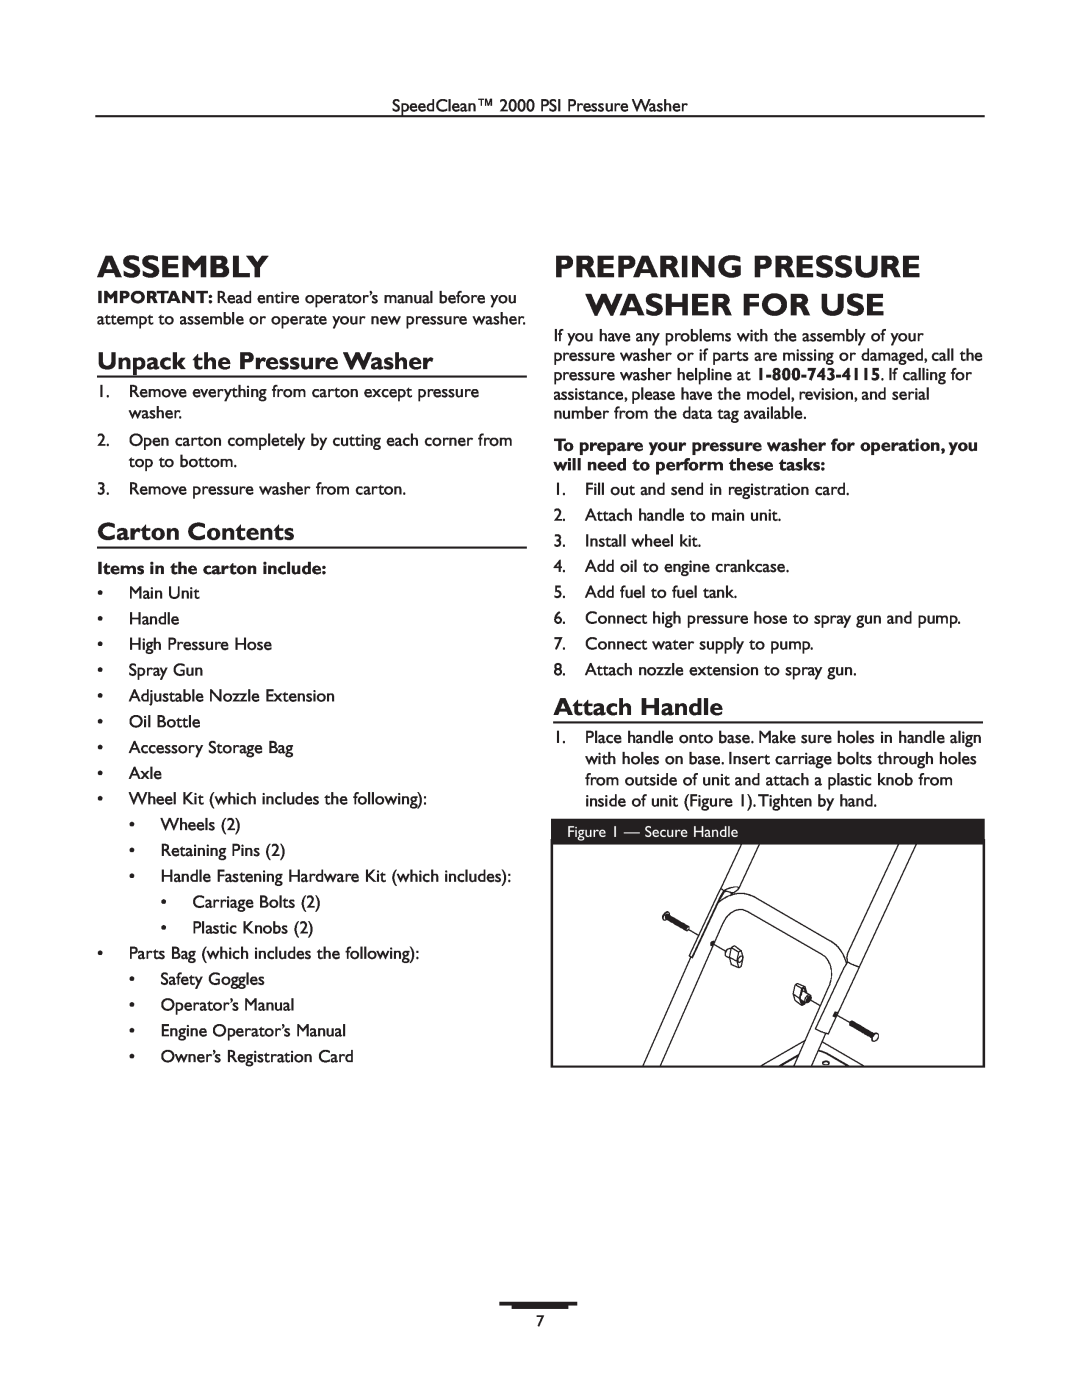 Briggs & Stratton 020238-0 Assembly, Preparing Pressure Washer For Use, Unpack the Pressure Washer, Carton Contents 